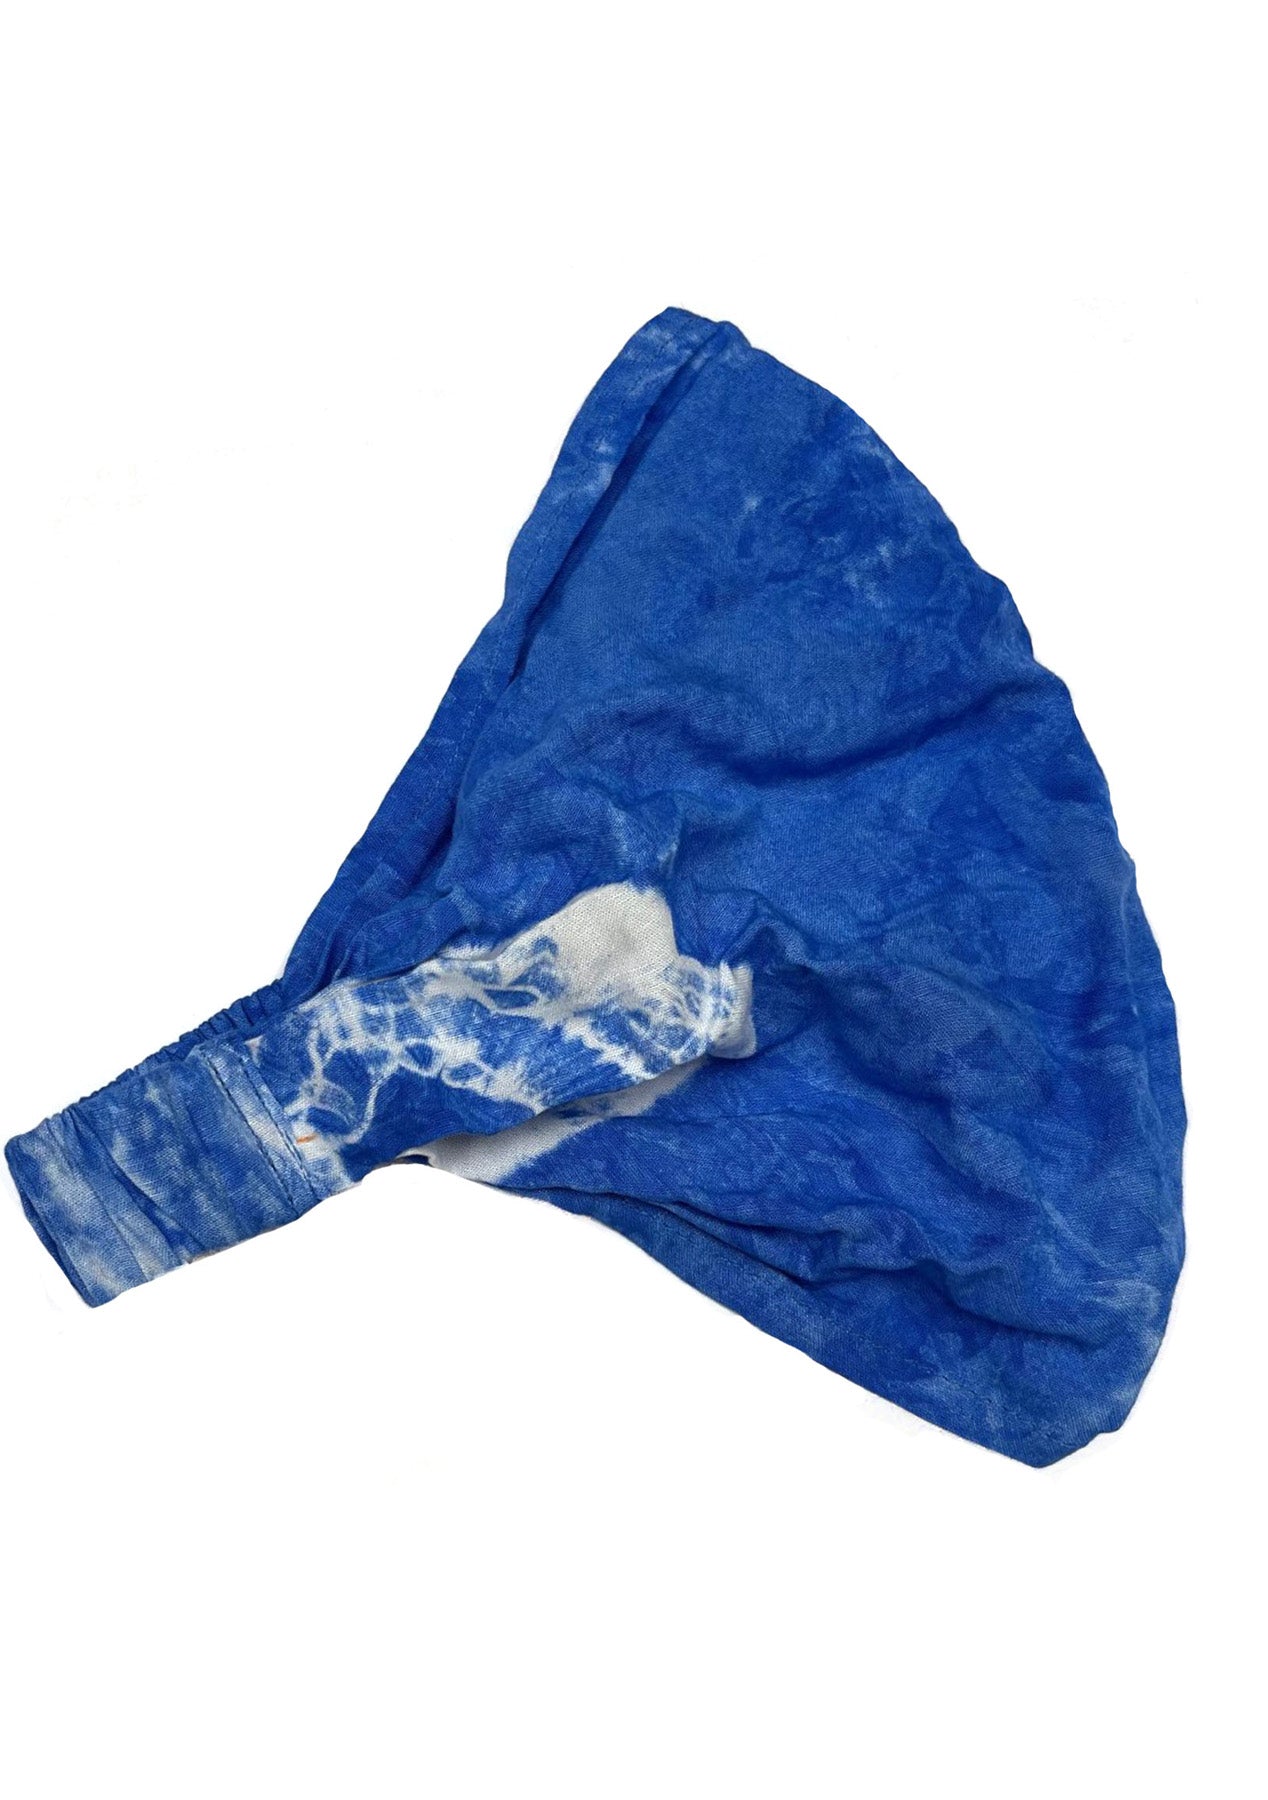 Bandana Headband | Royal Blue Tie Dye